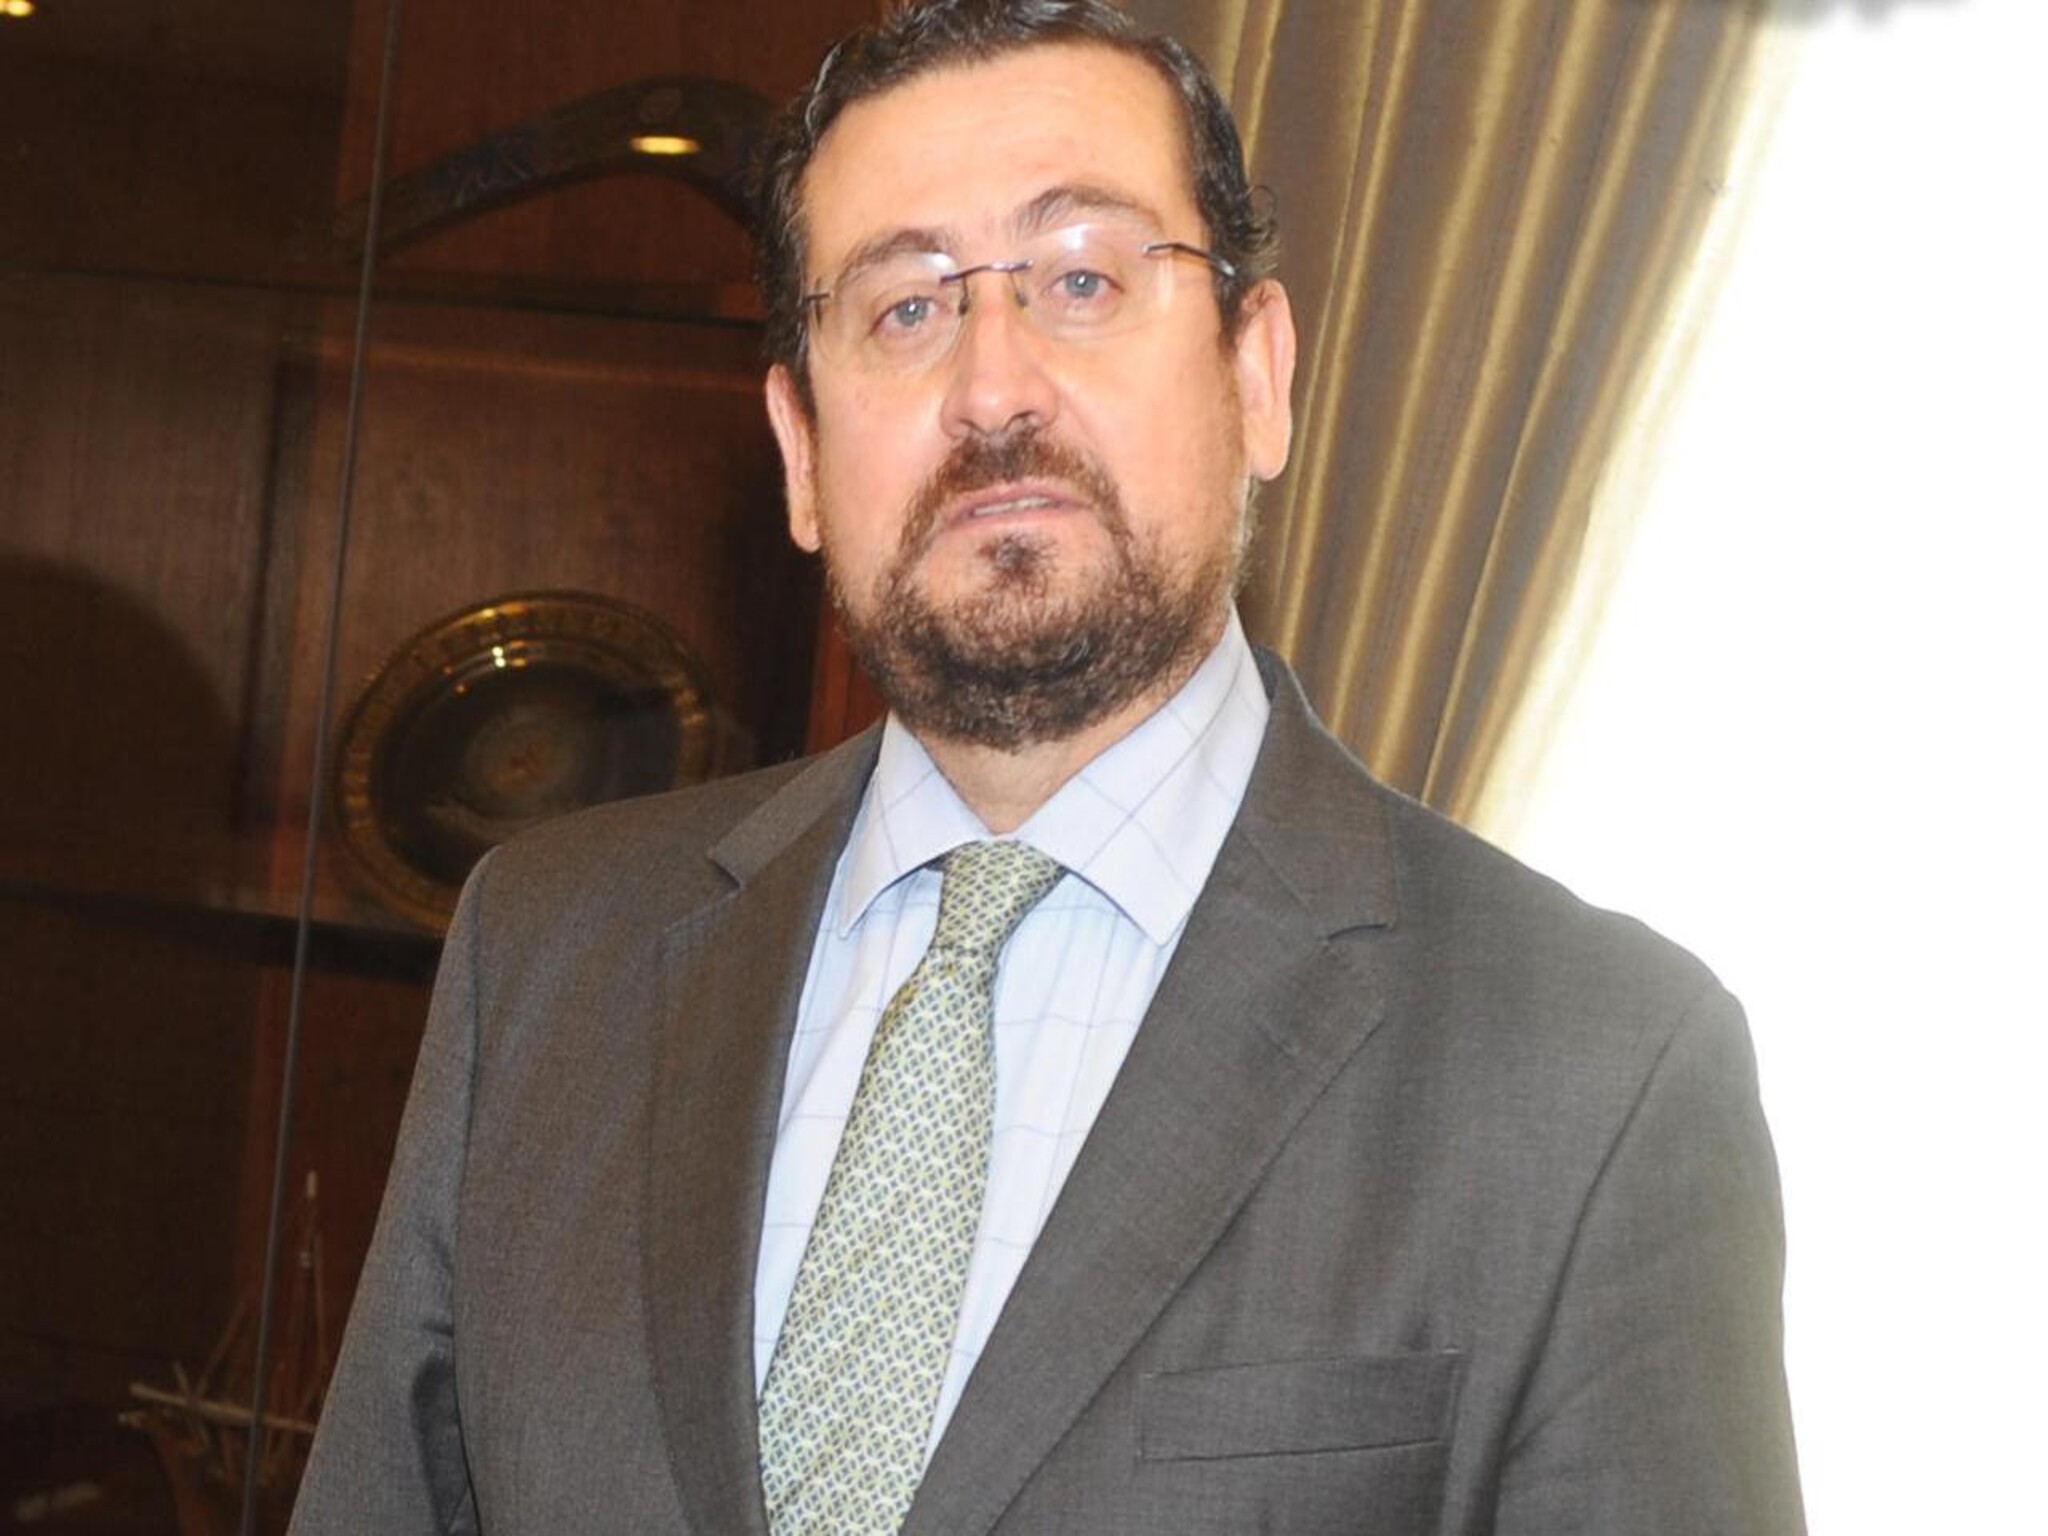 The Spanish Ambassador opens new visa centers in Kuwait